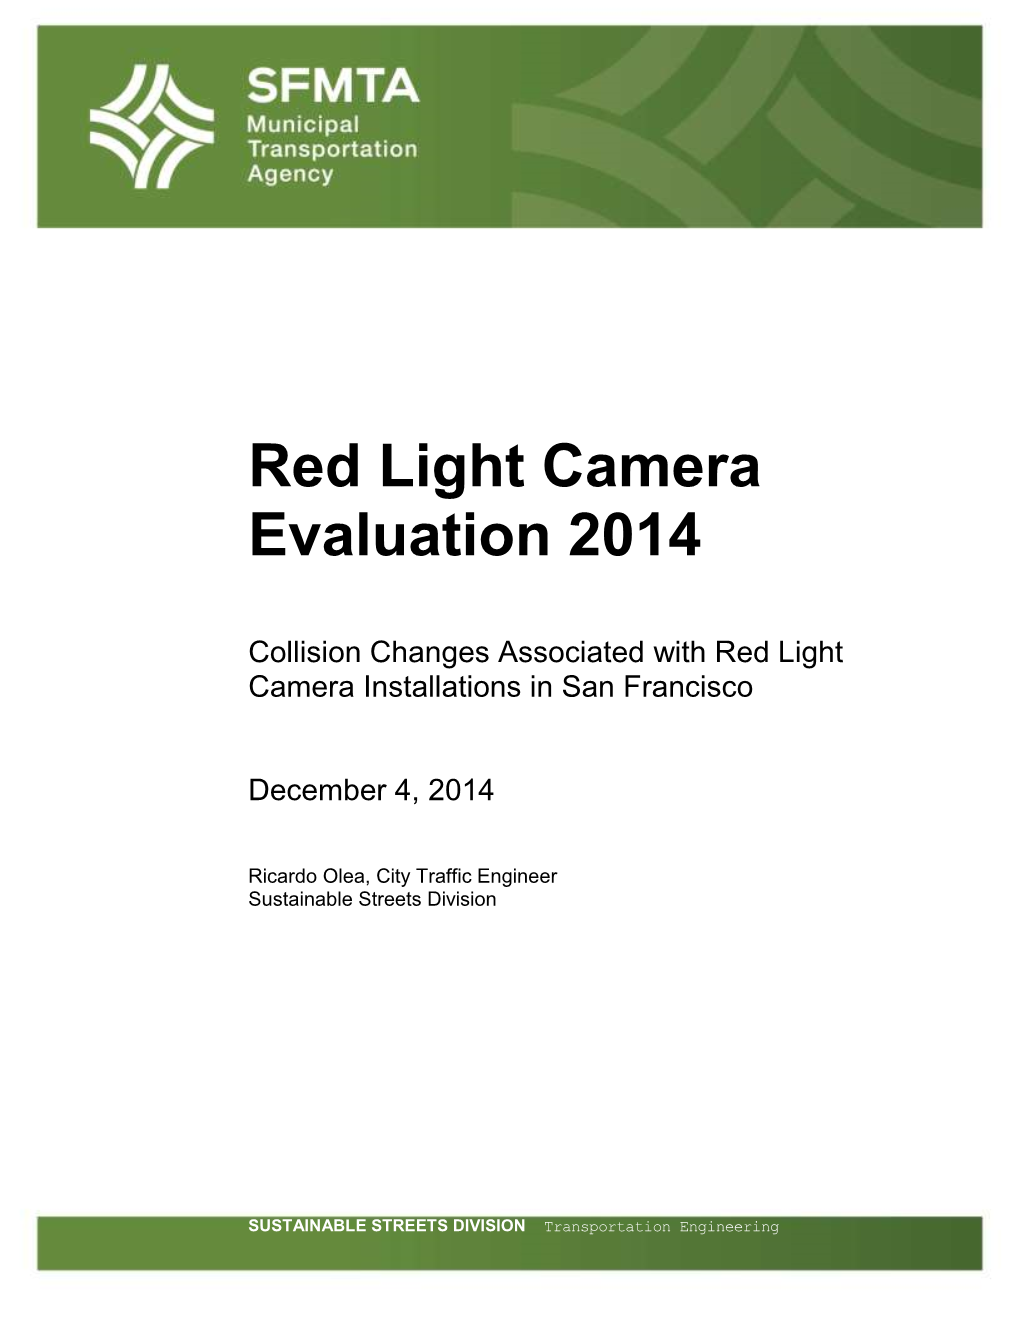 Red Light Camera Evaluation 2014